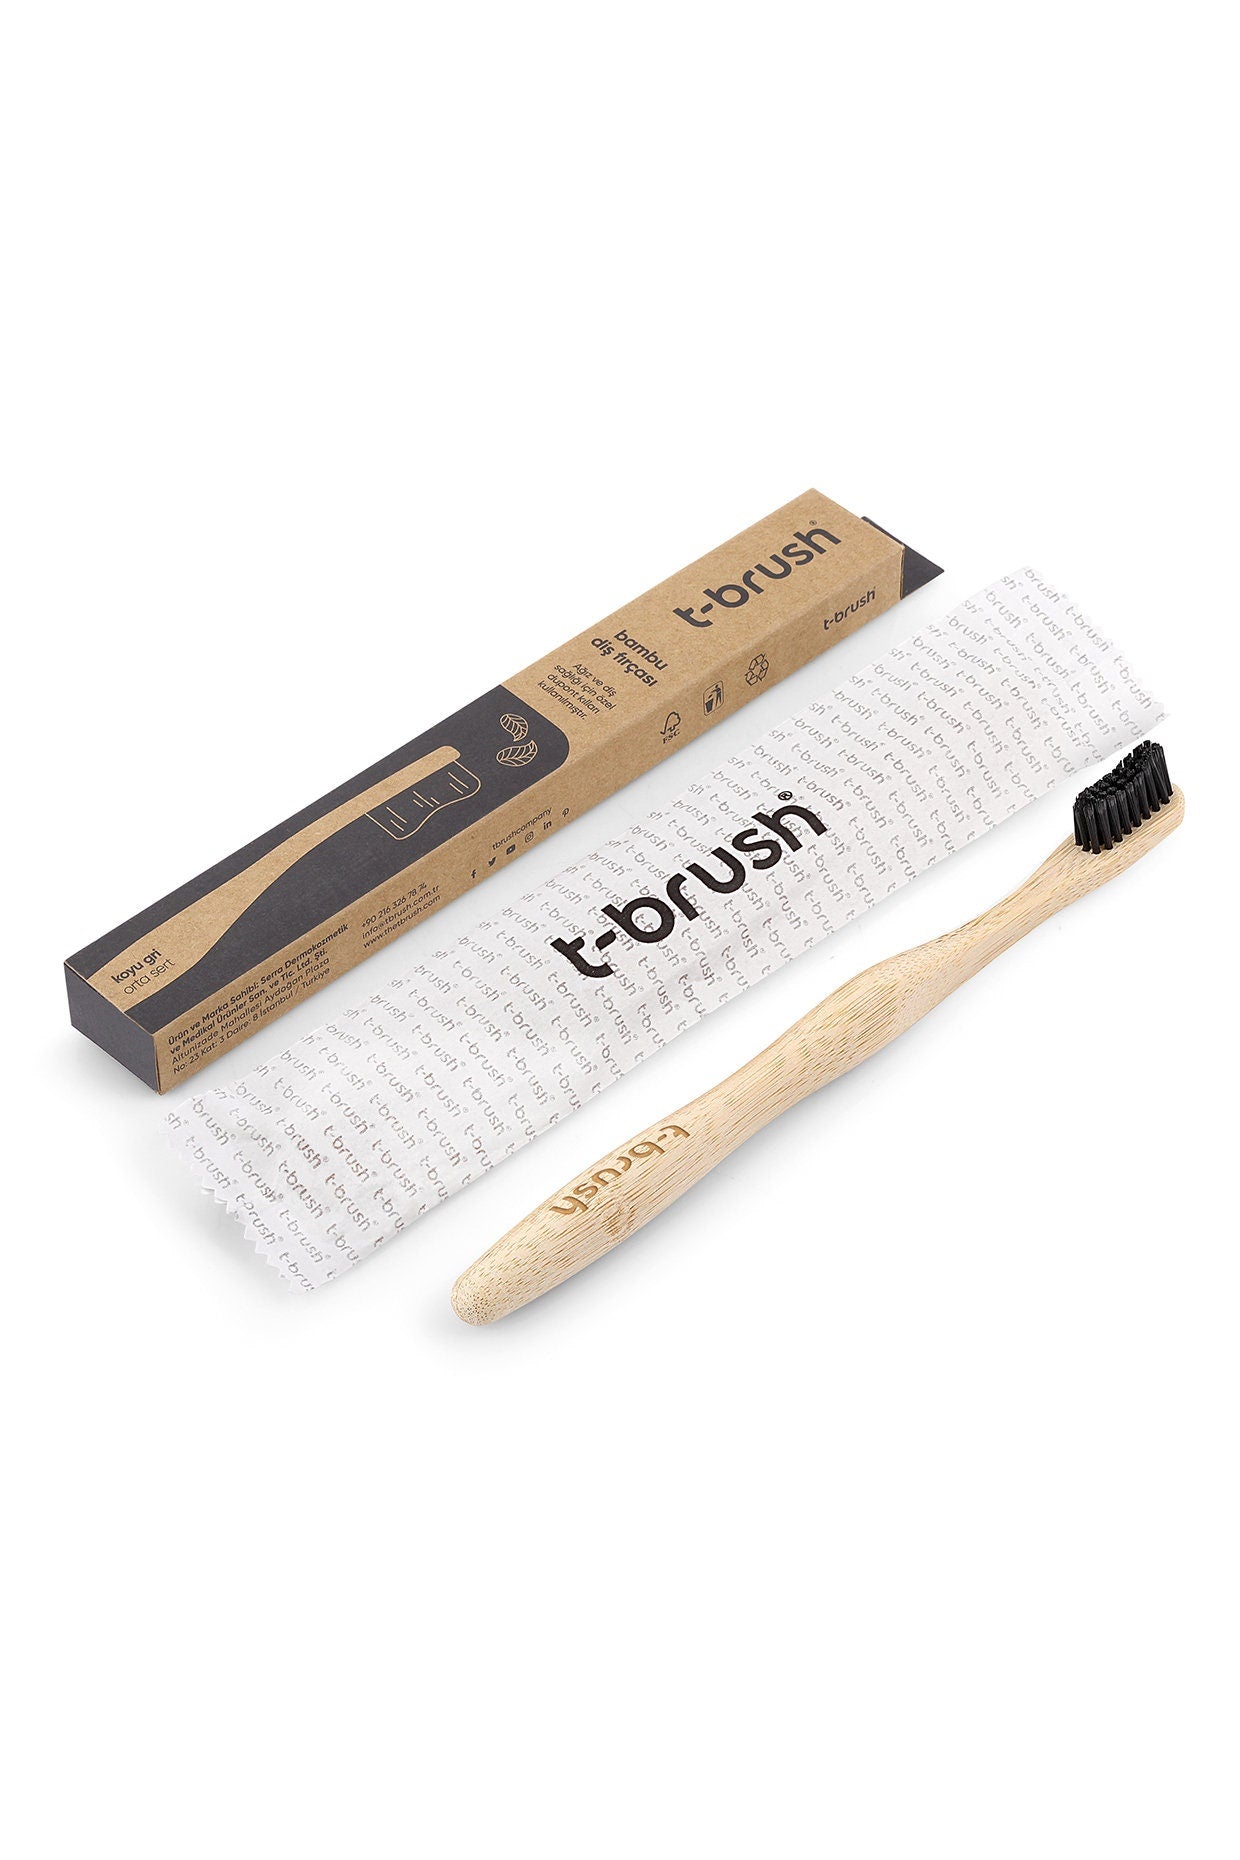 T-Brush Bamboo Toothbrush - Brown - Dark Grey Colour - Medium Hard - Dupont Bristles - Natural Toothbrush - Eco Friendly - Everyday use